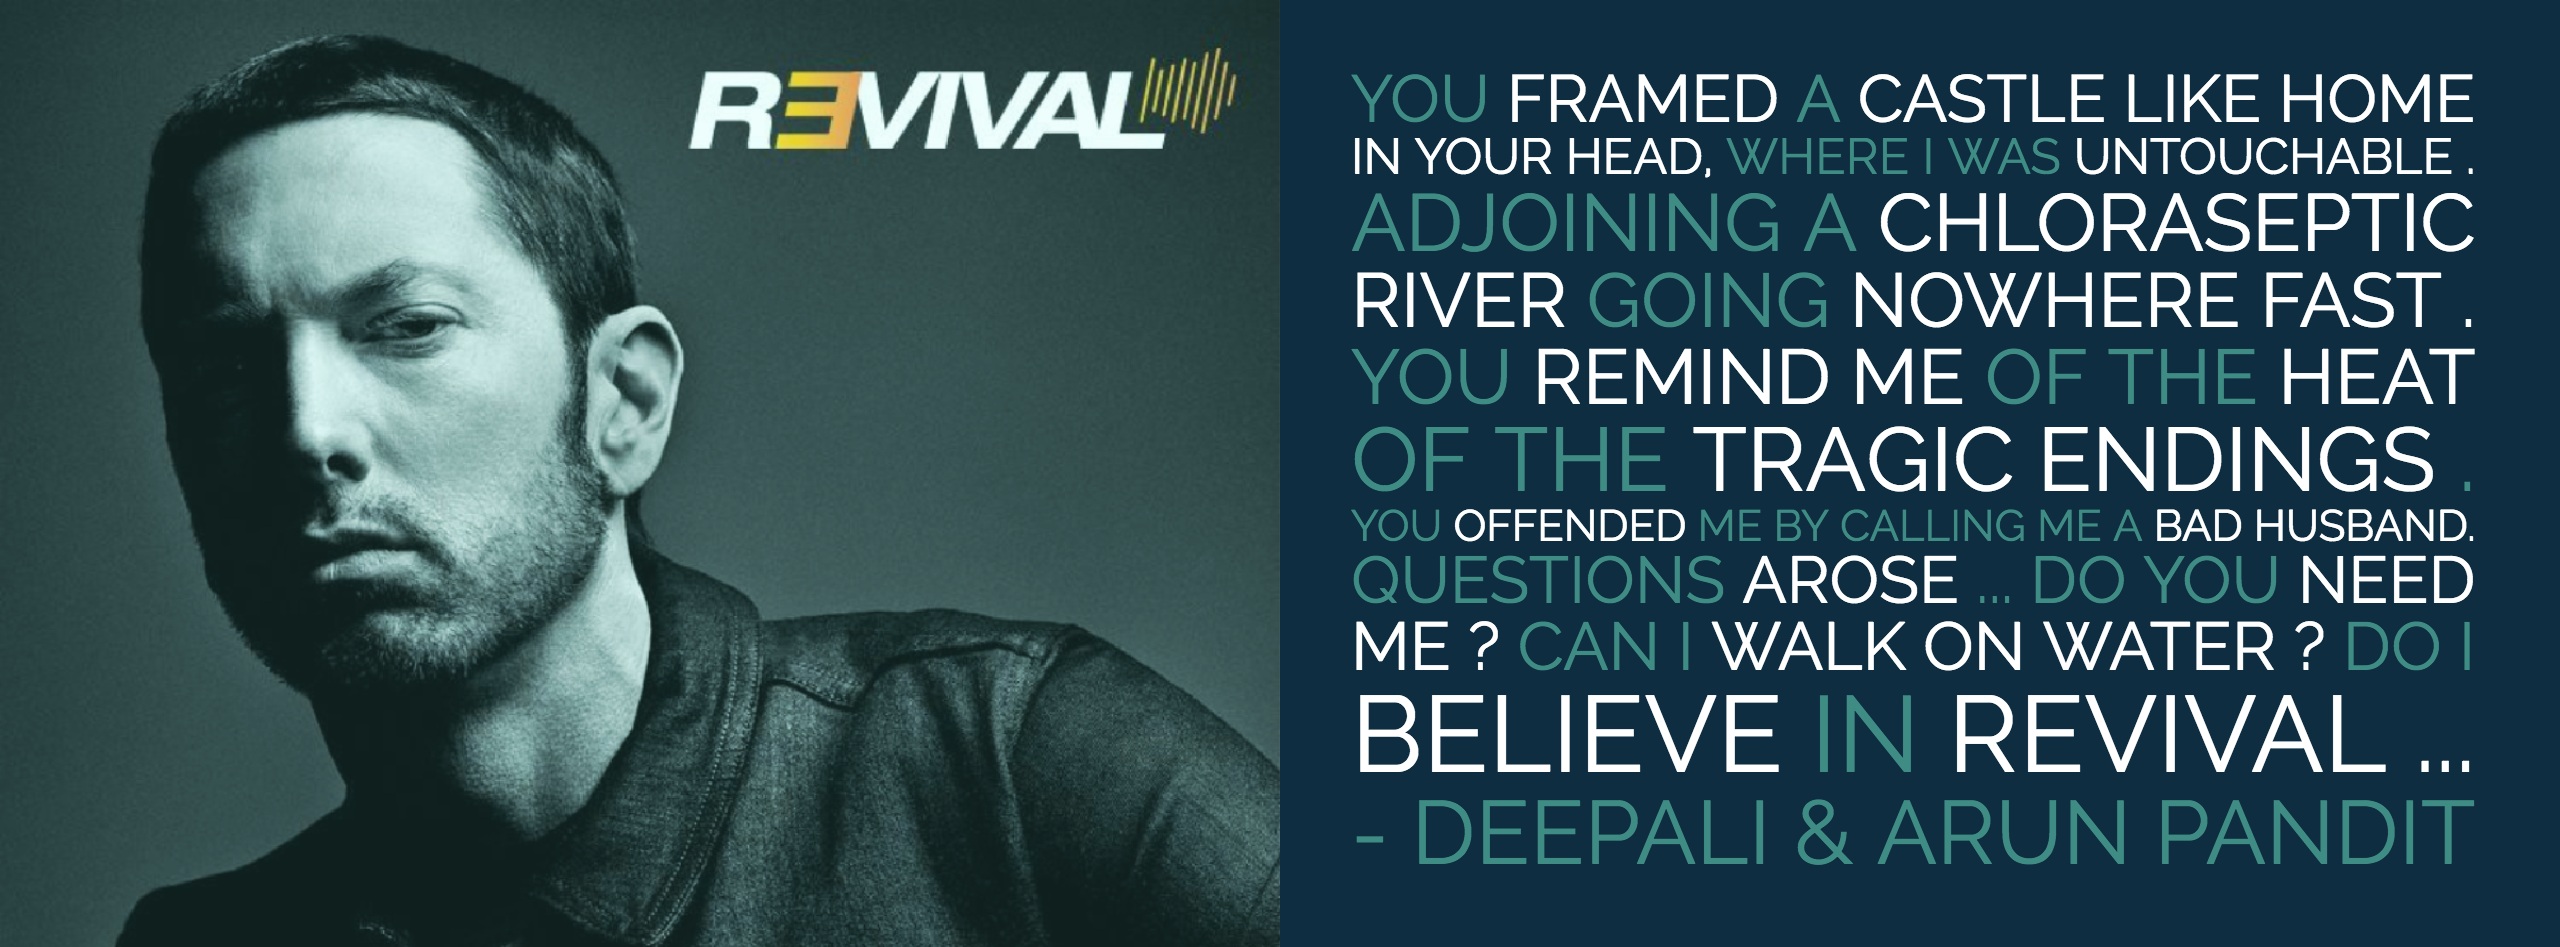 A Poem Tribute to Eminem's New Album Revival By Deepali & Arun Pandit Eminem Revival Tribute By Deepali Arun Pandit